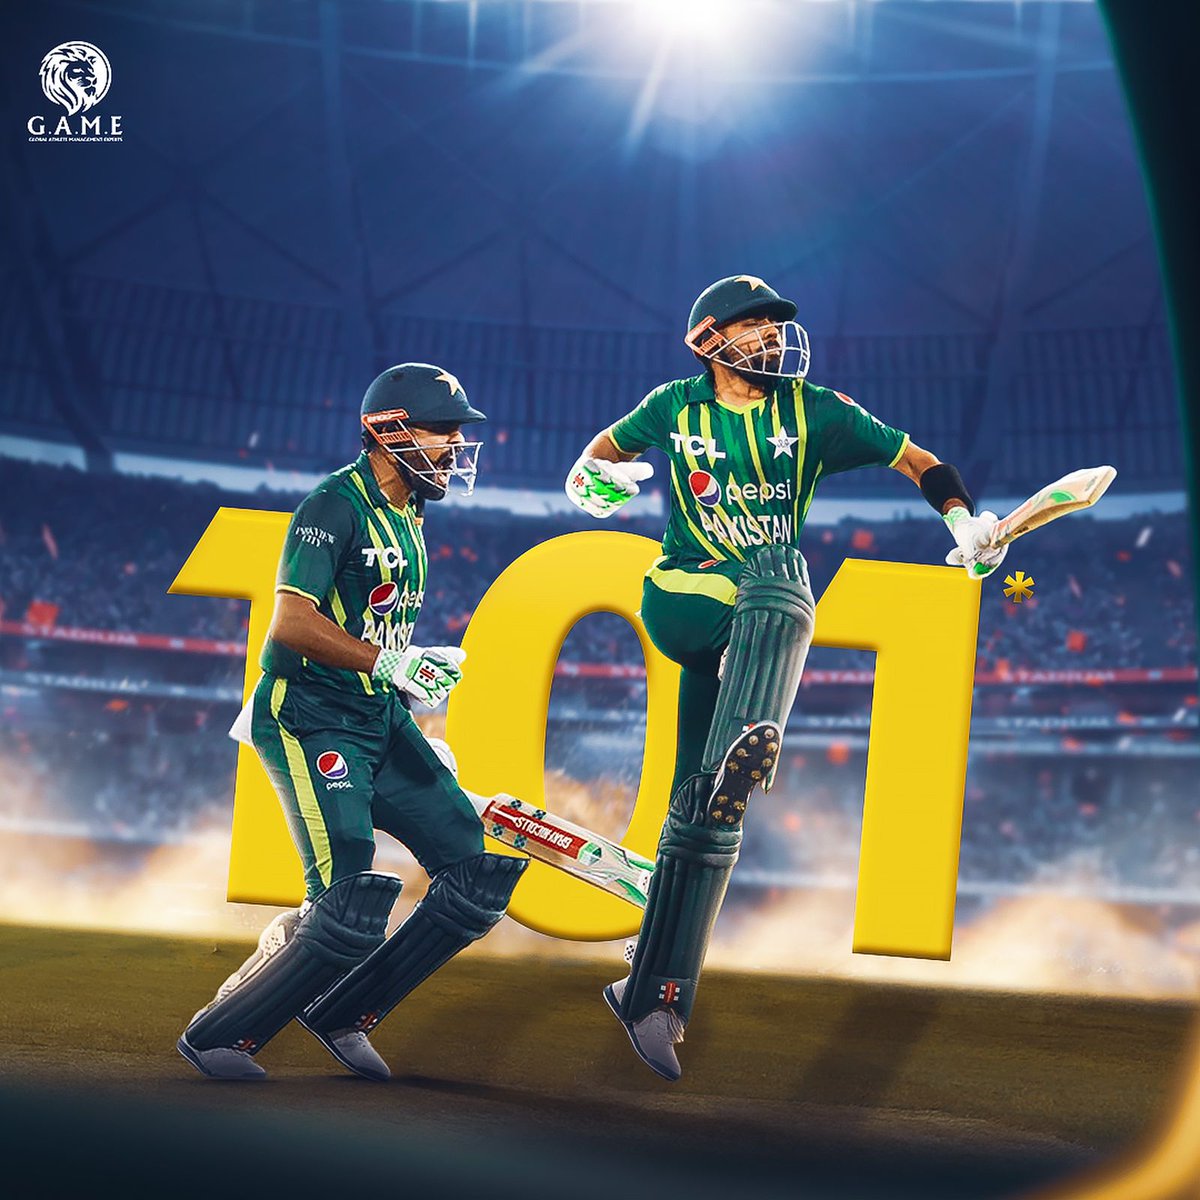 Congratulations to Babar Azam on scoring 3rd T20I 100 for Pakistan tonight 👏🏼🇵🇰

#IamGAME #BabarAzam #PAKvNZ #CricketTwitter